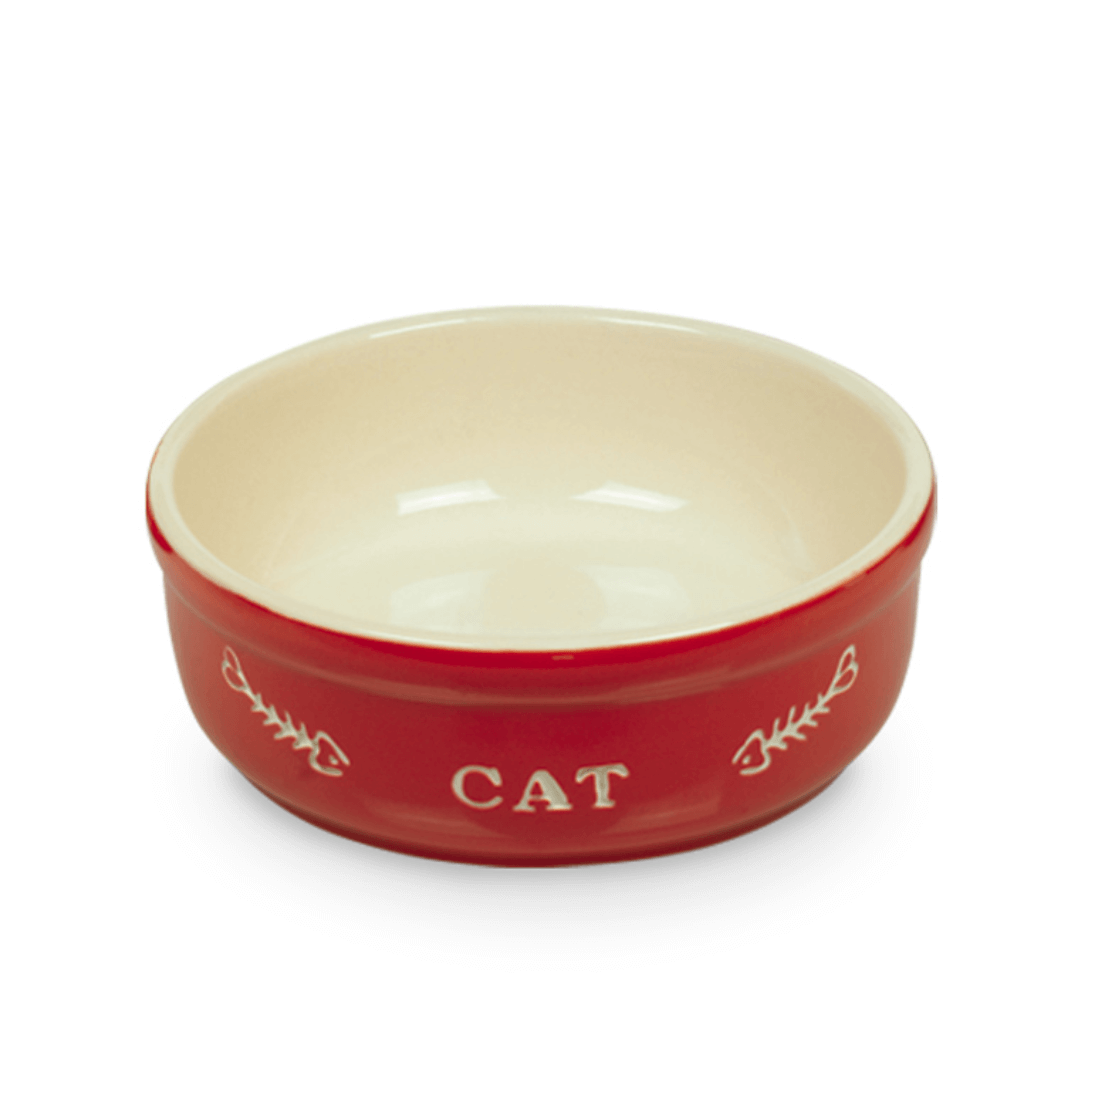 Castron ceramic pentru pisici Nobby 250 ml